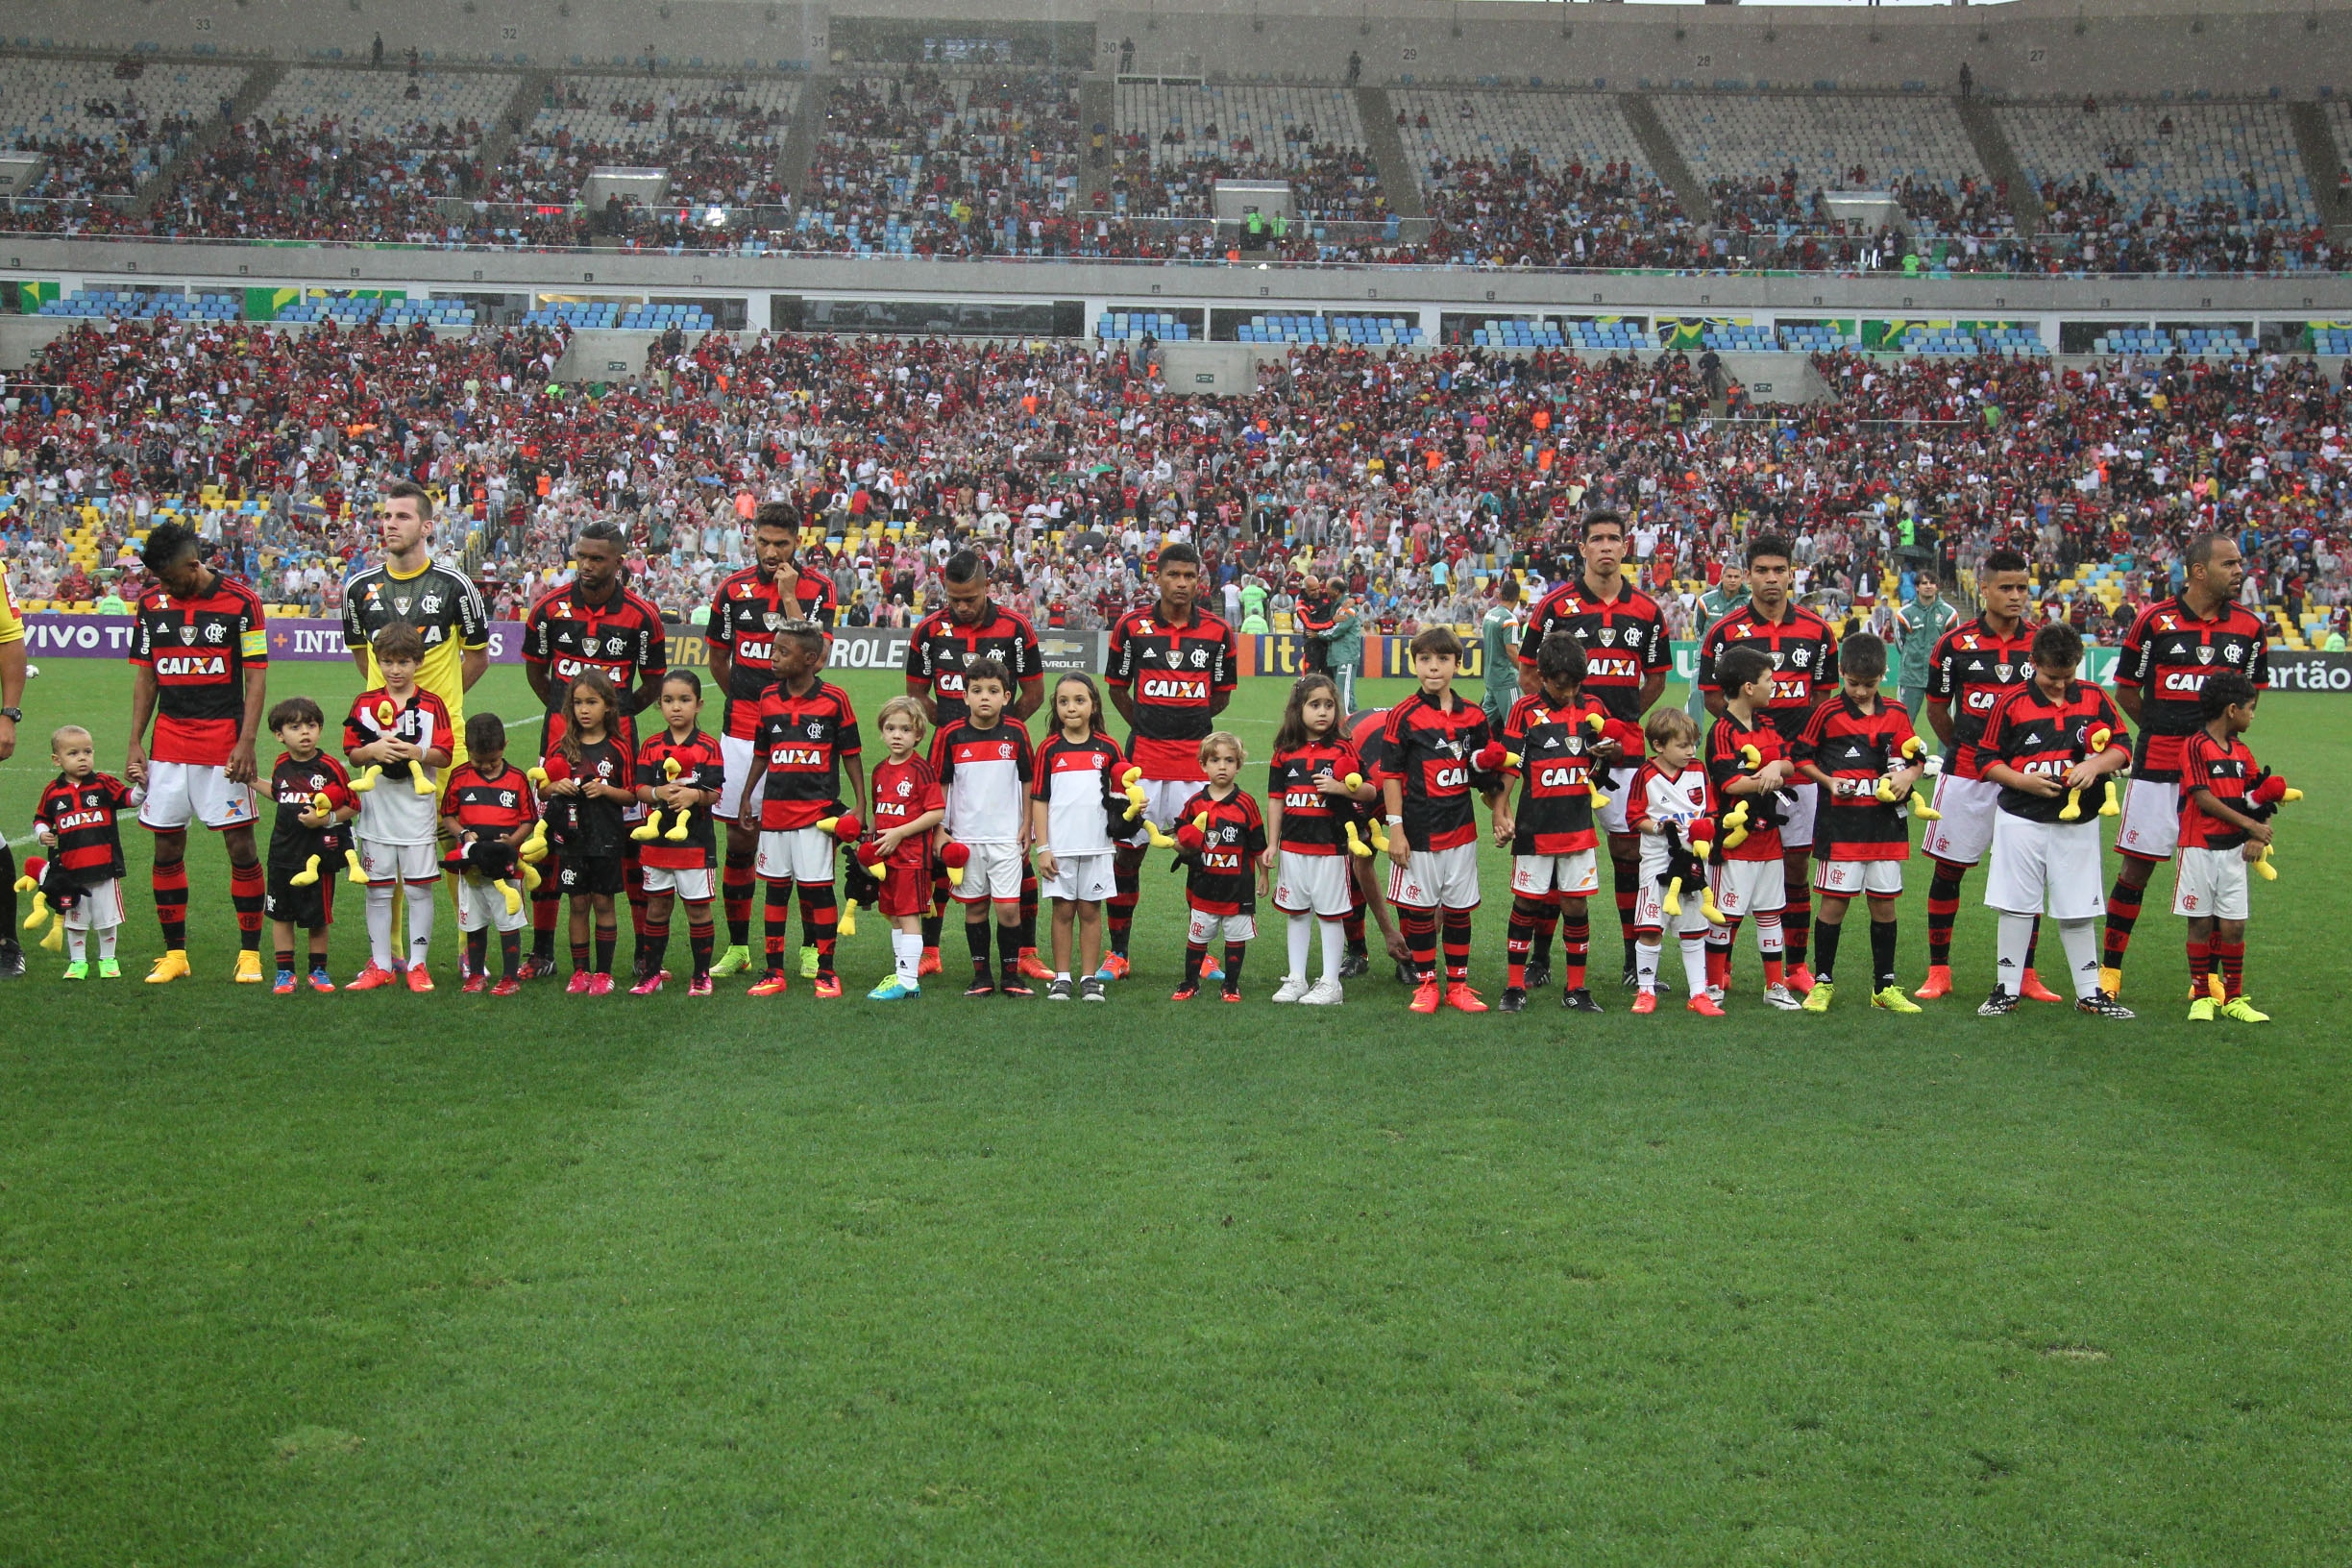 C.R.Flamengo 1 x 1 Fluminense (RJ) - 21-09-2014 - Campeonato Brasileiro